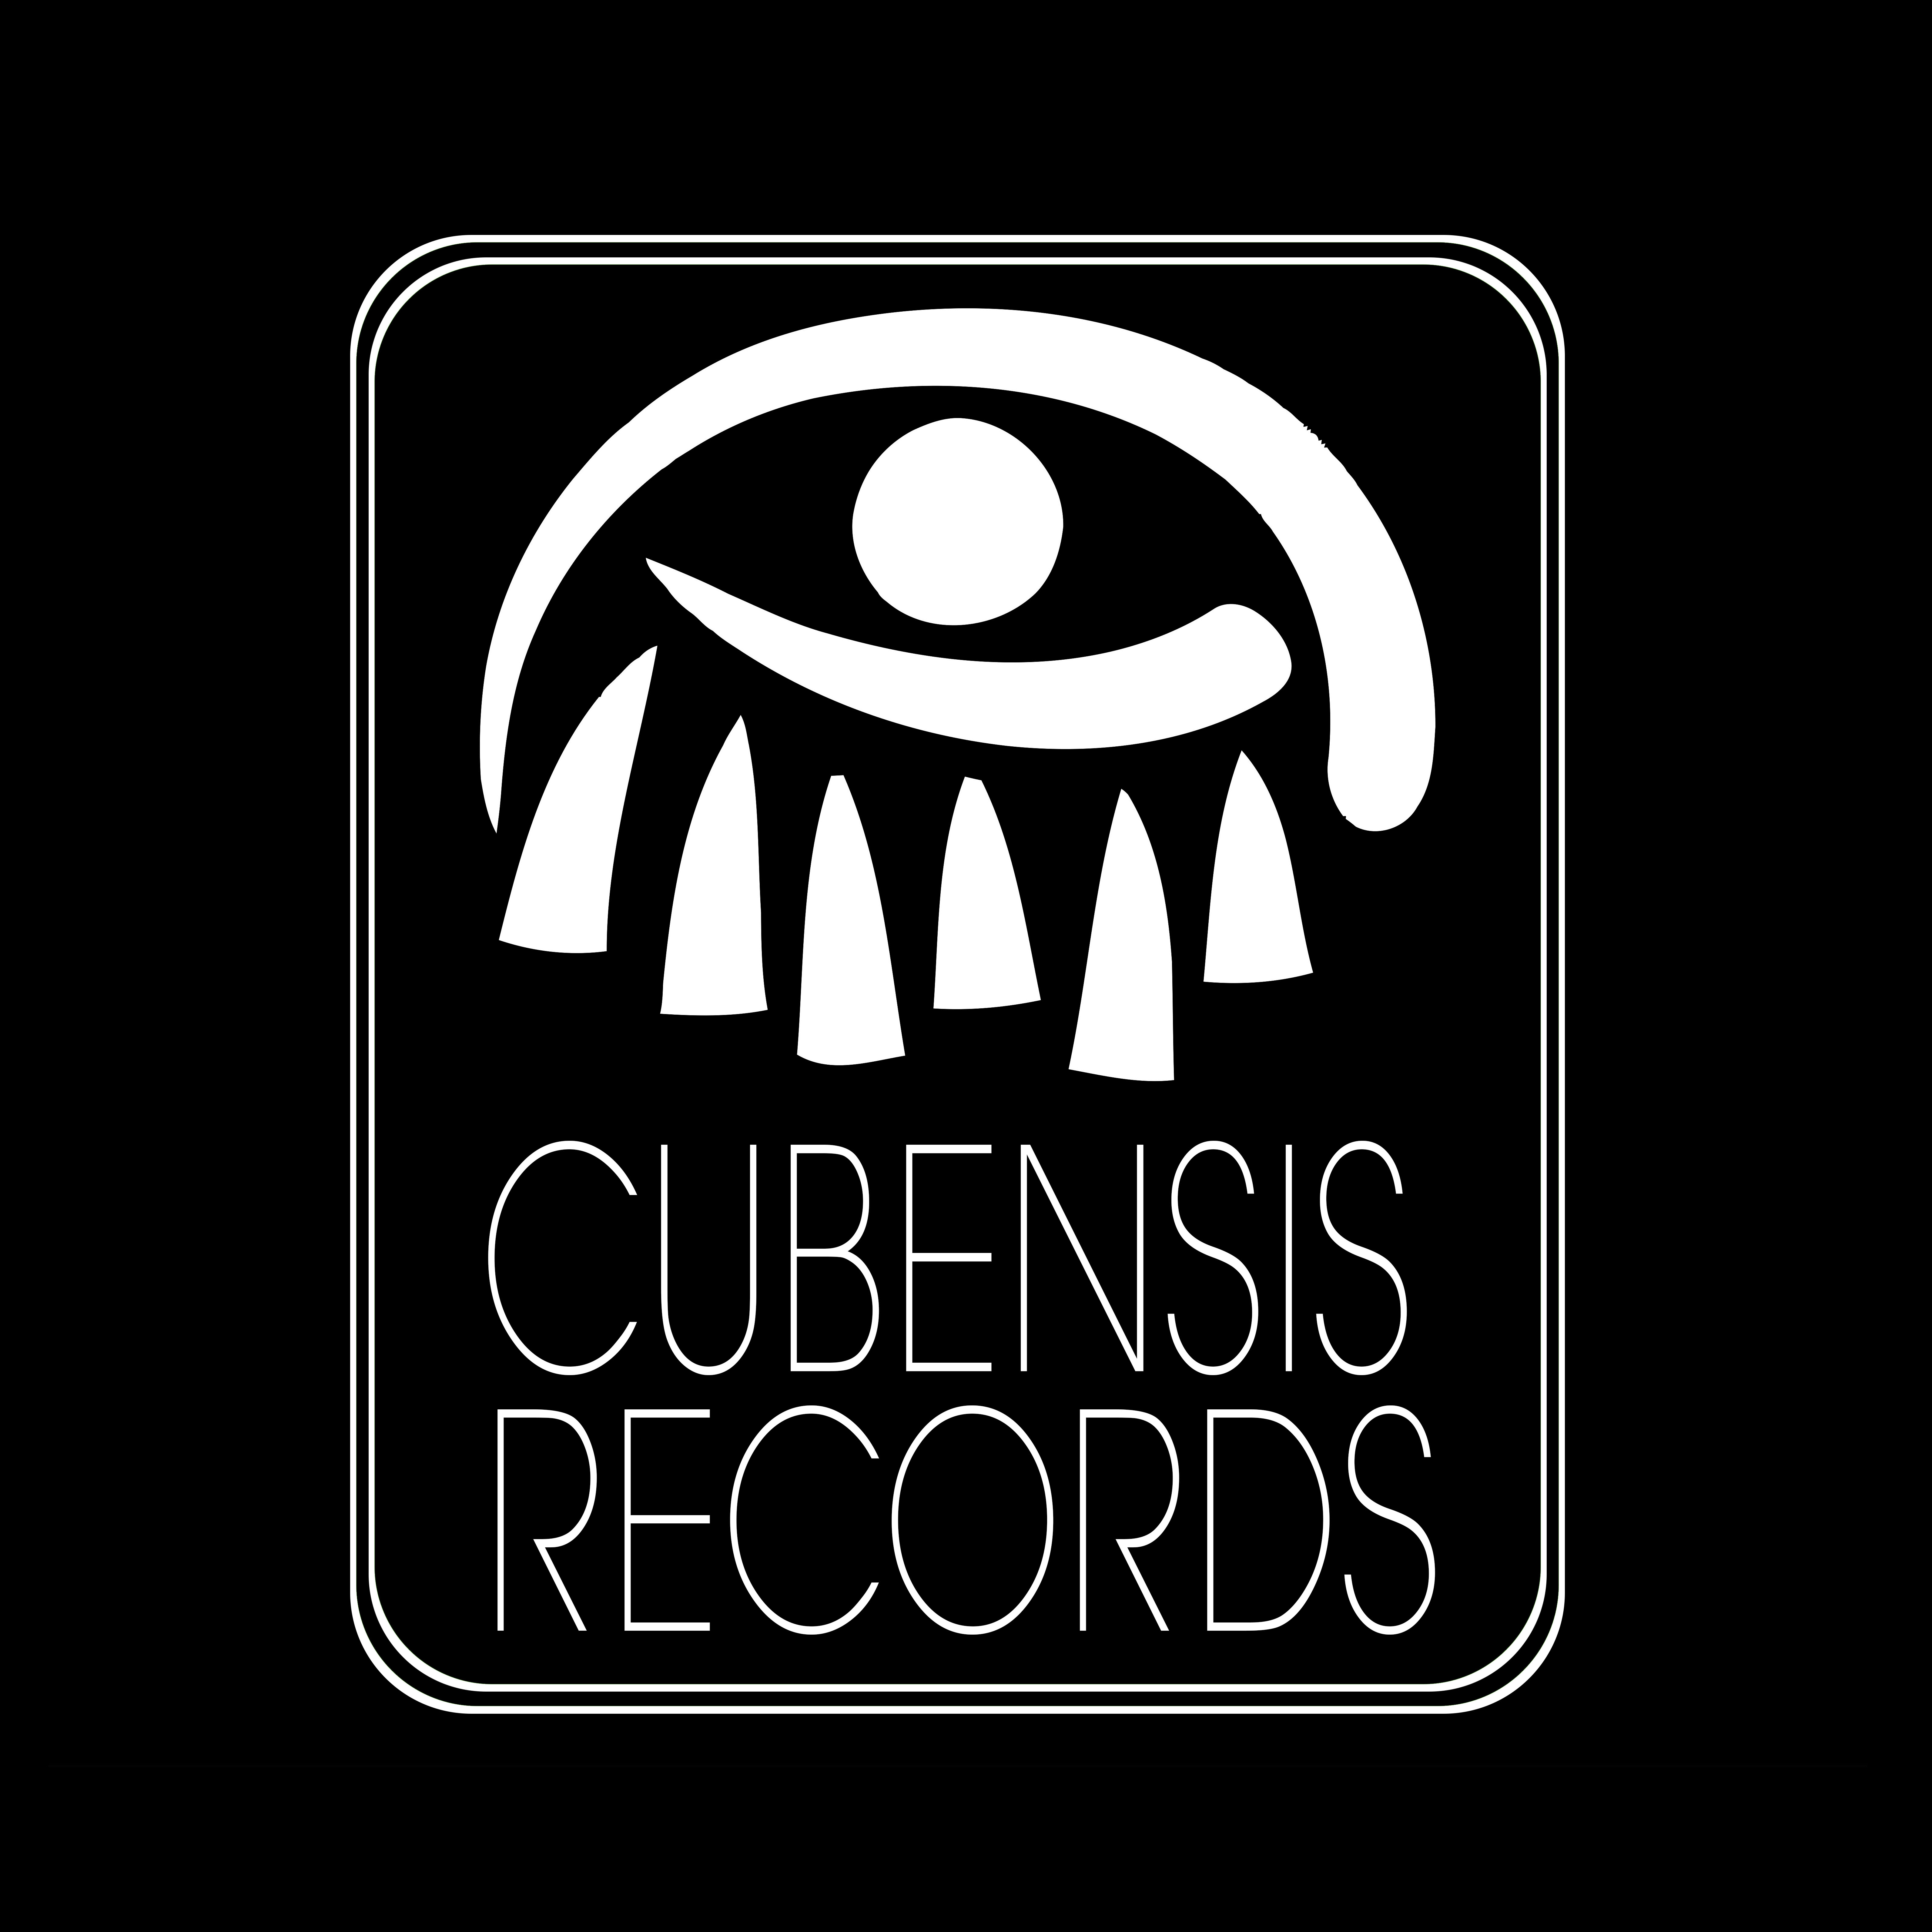 0.cubensis-records